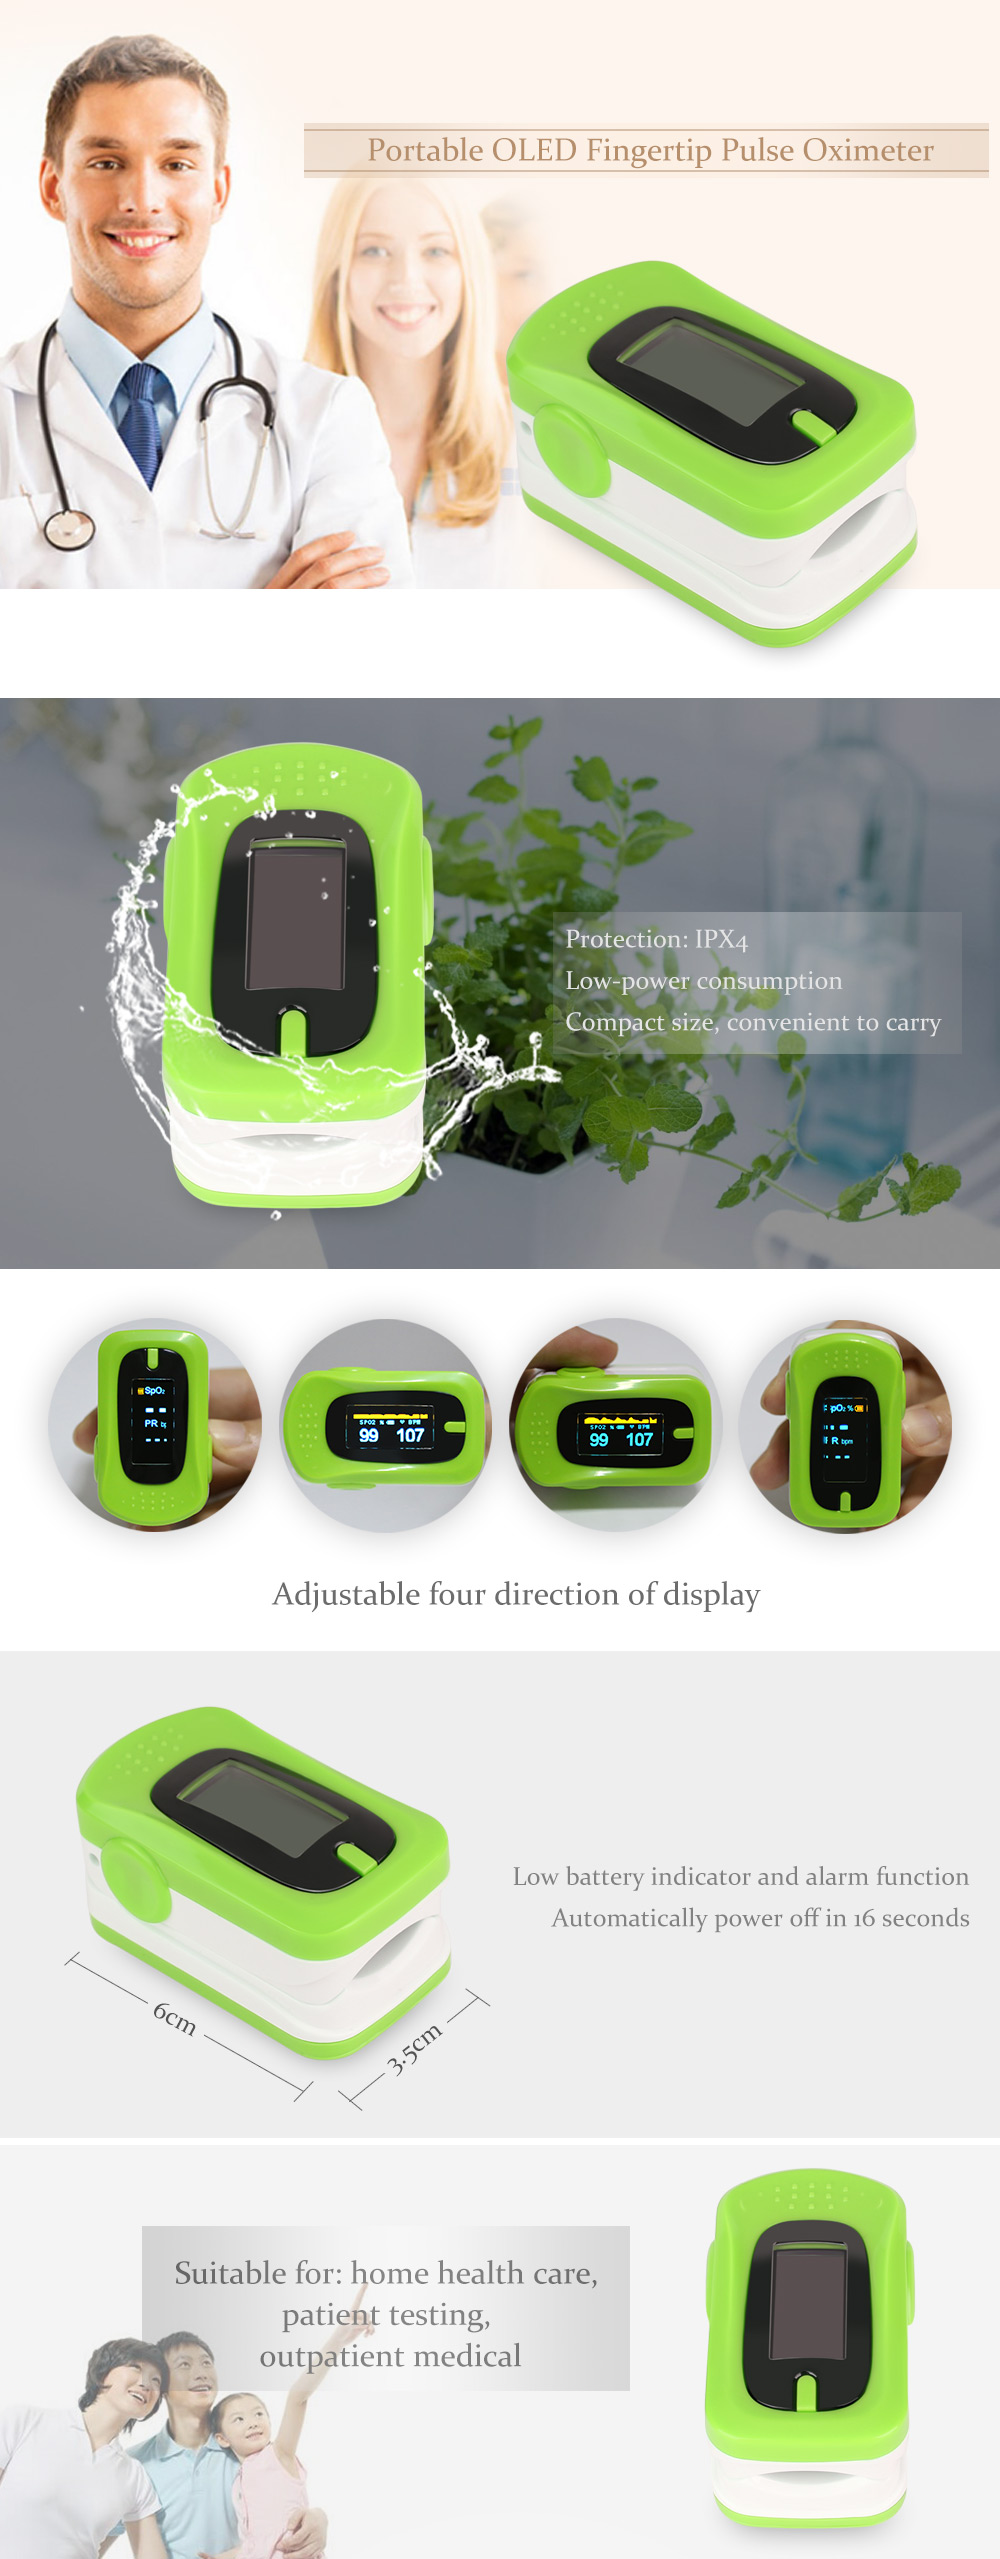 Portable OLED Fingertip Pulse Oximeter SpO2 Saturation Meter Health Care